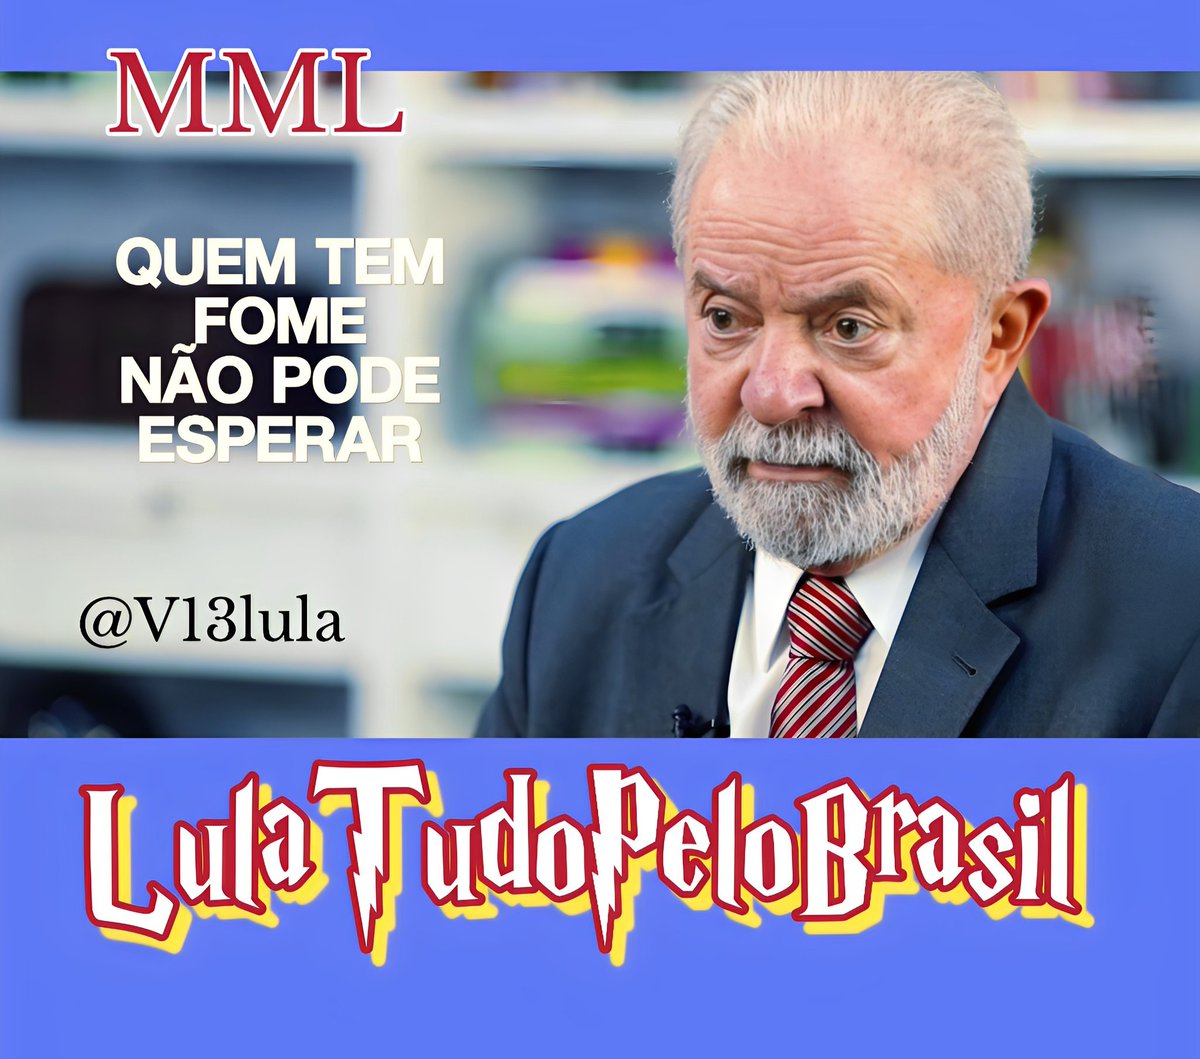 OBRIGADA LULA 

#LulaTudoPeloBrasil
#MML